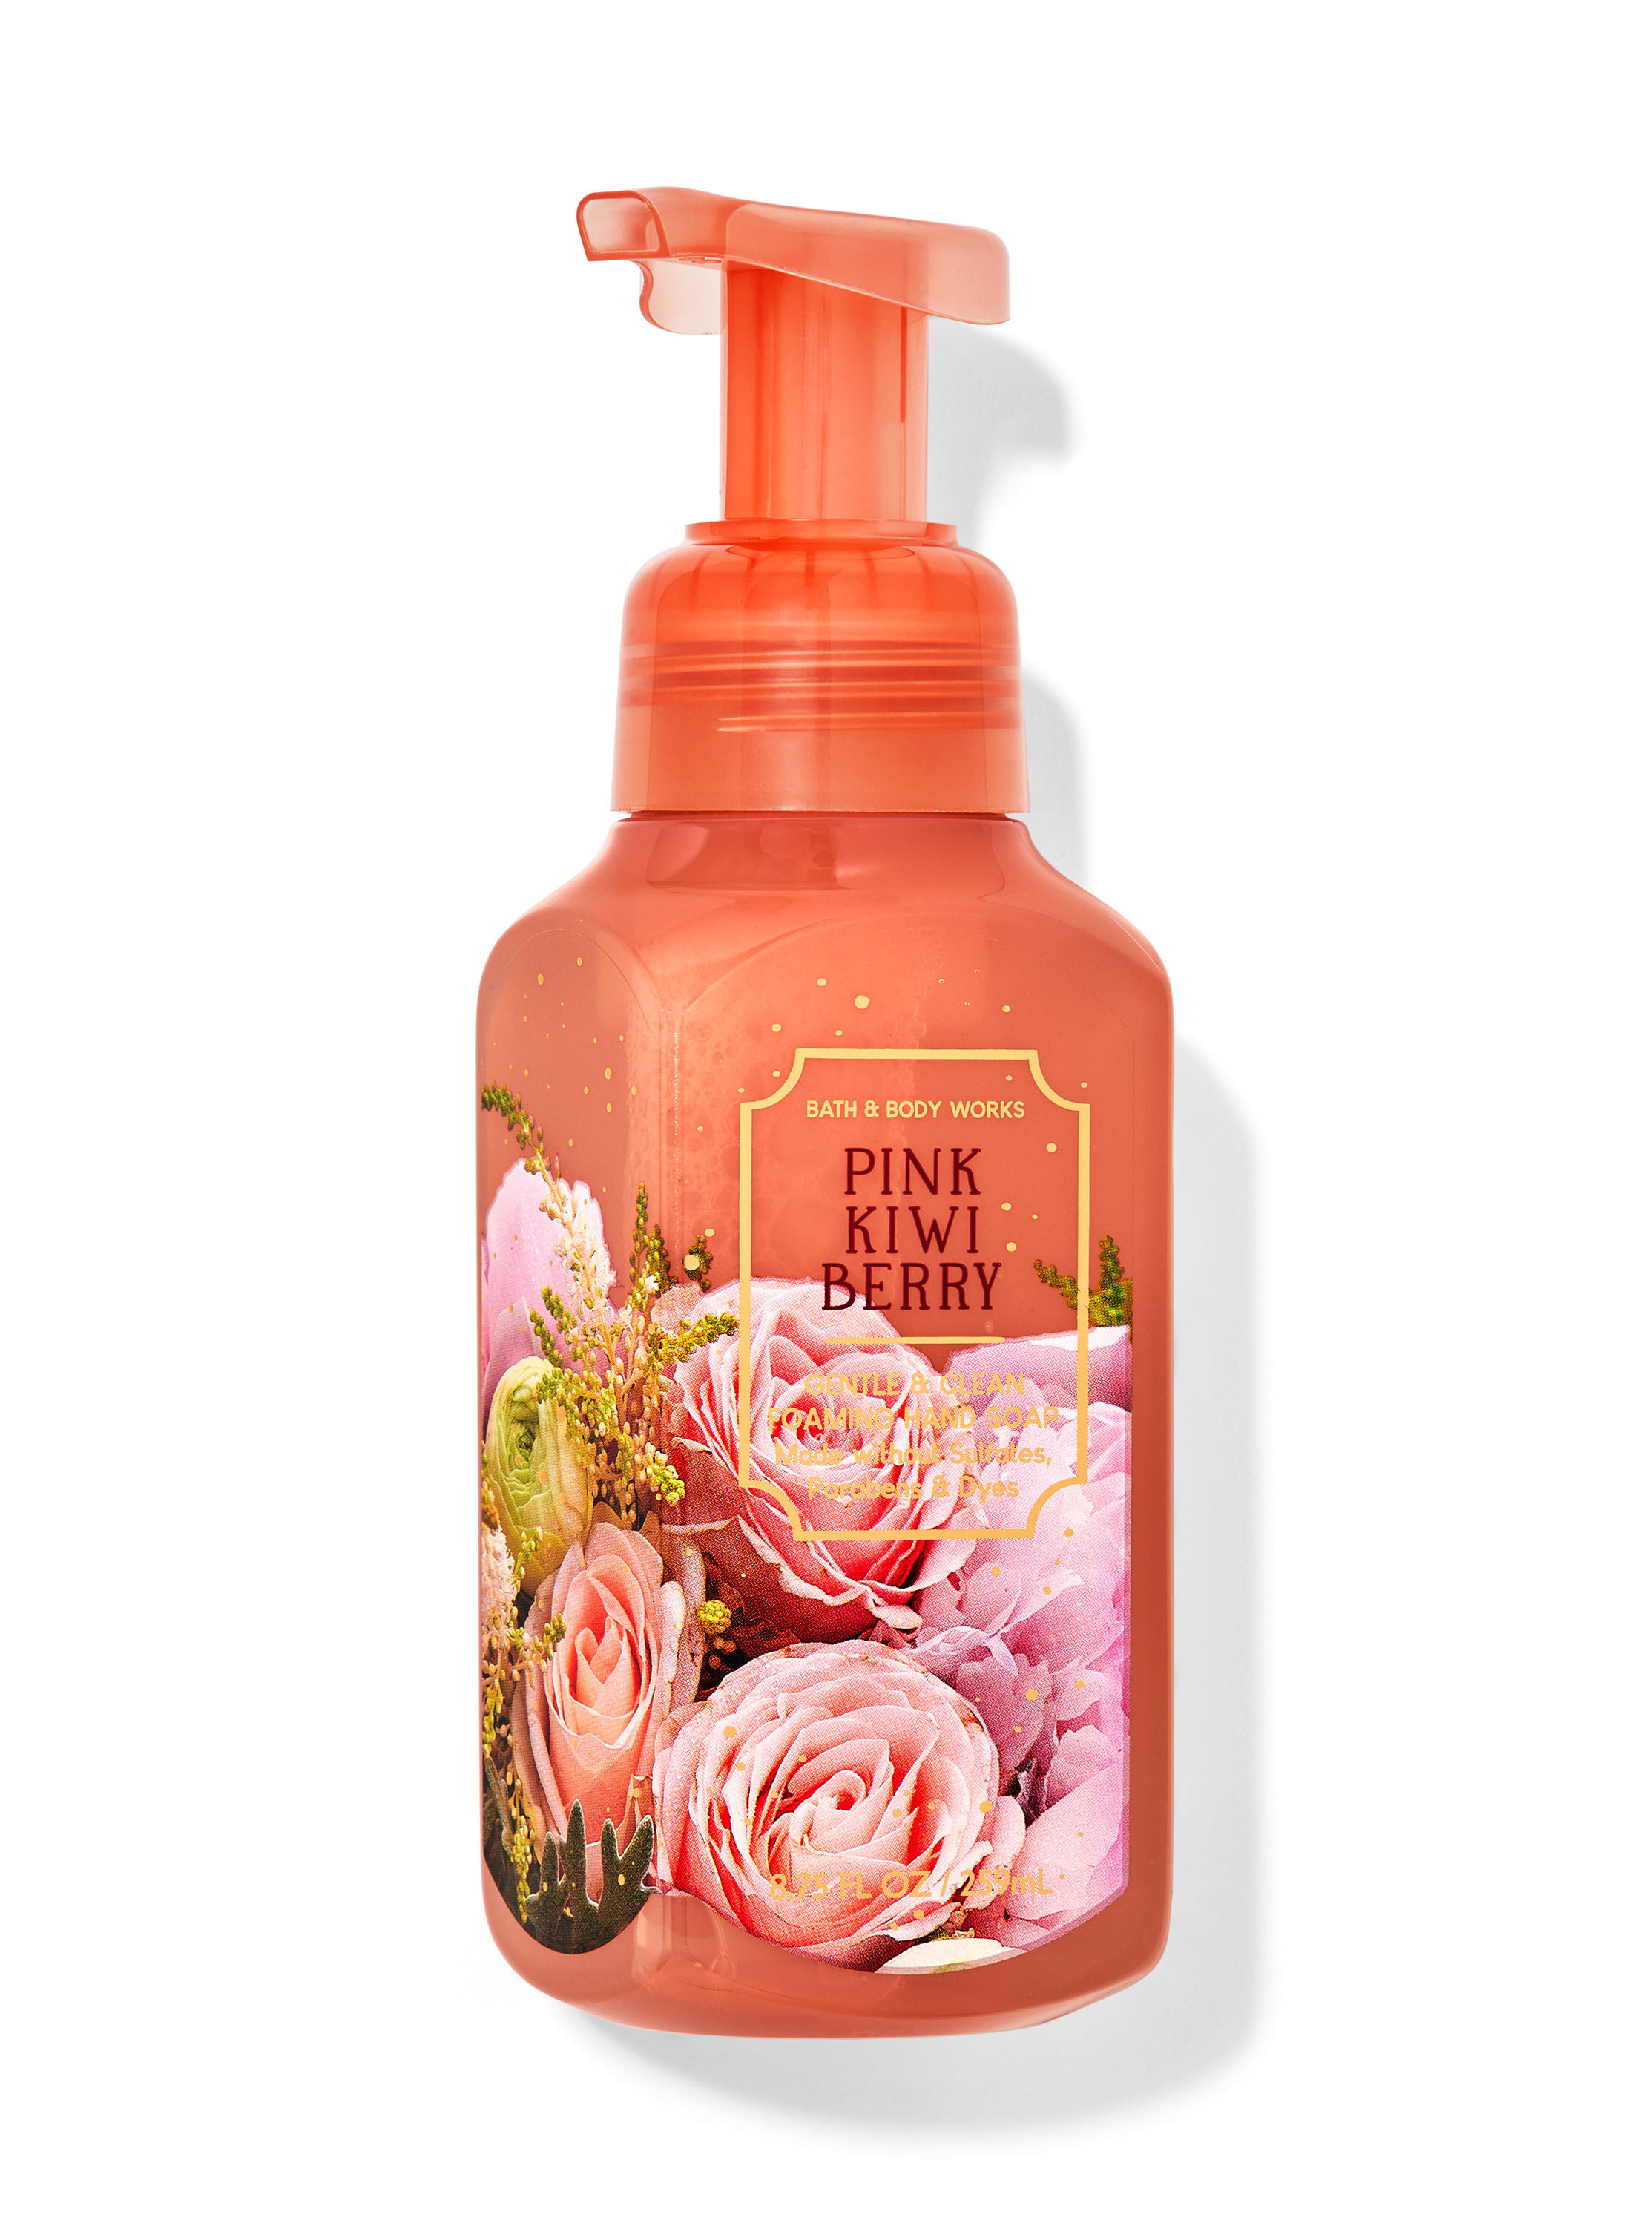 Pink Kiwi Berry Gentle & Clean Foaming Hand Soap